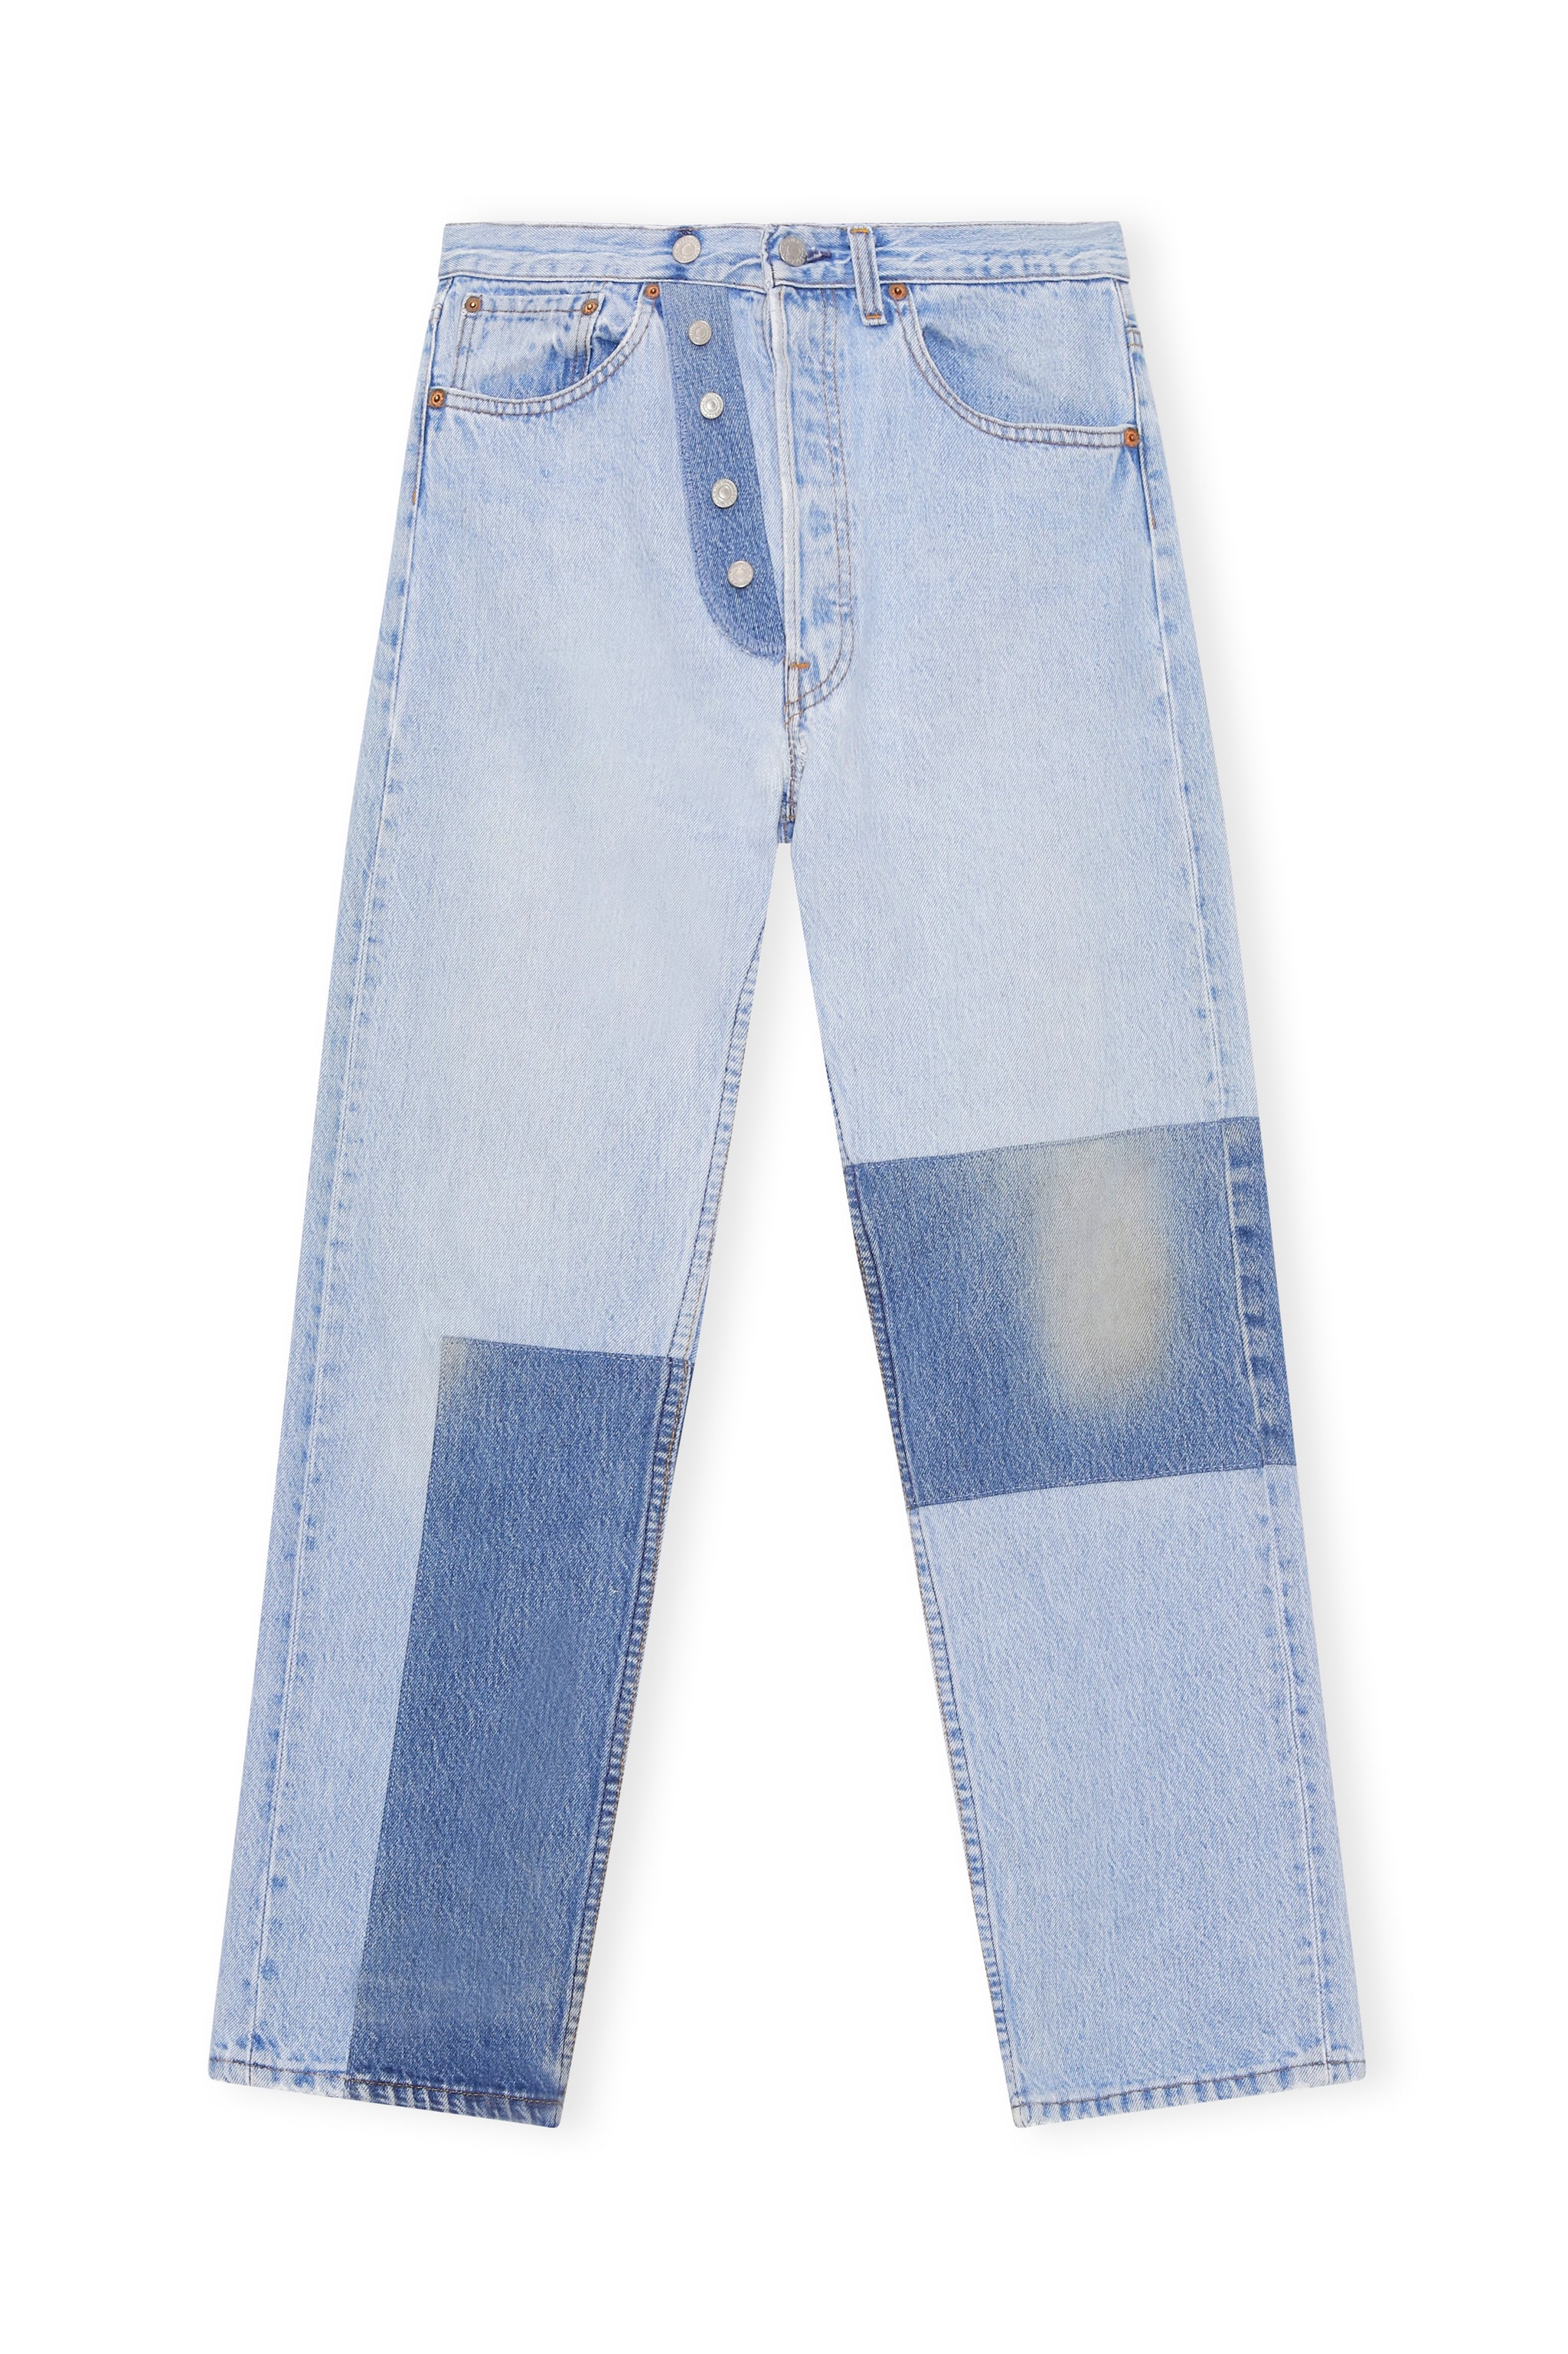 custom 501 levi jeans